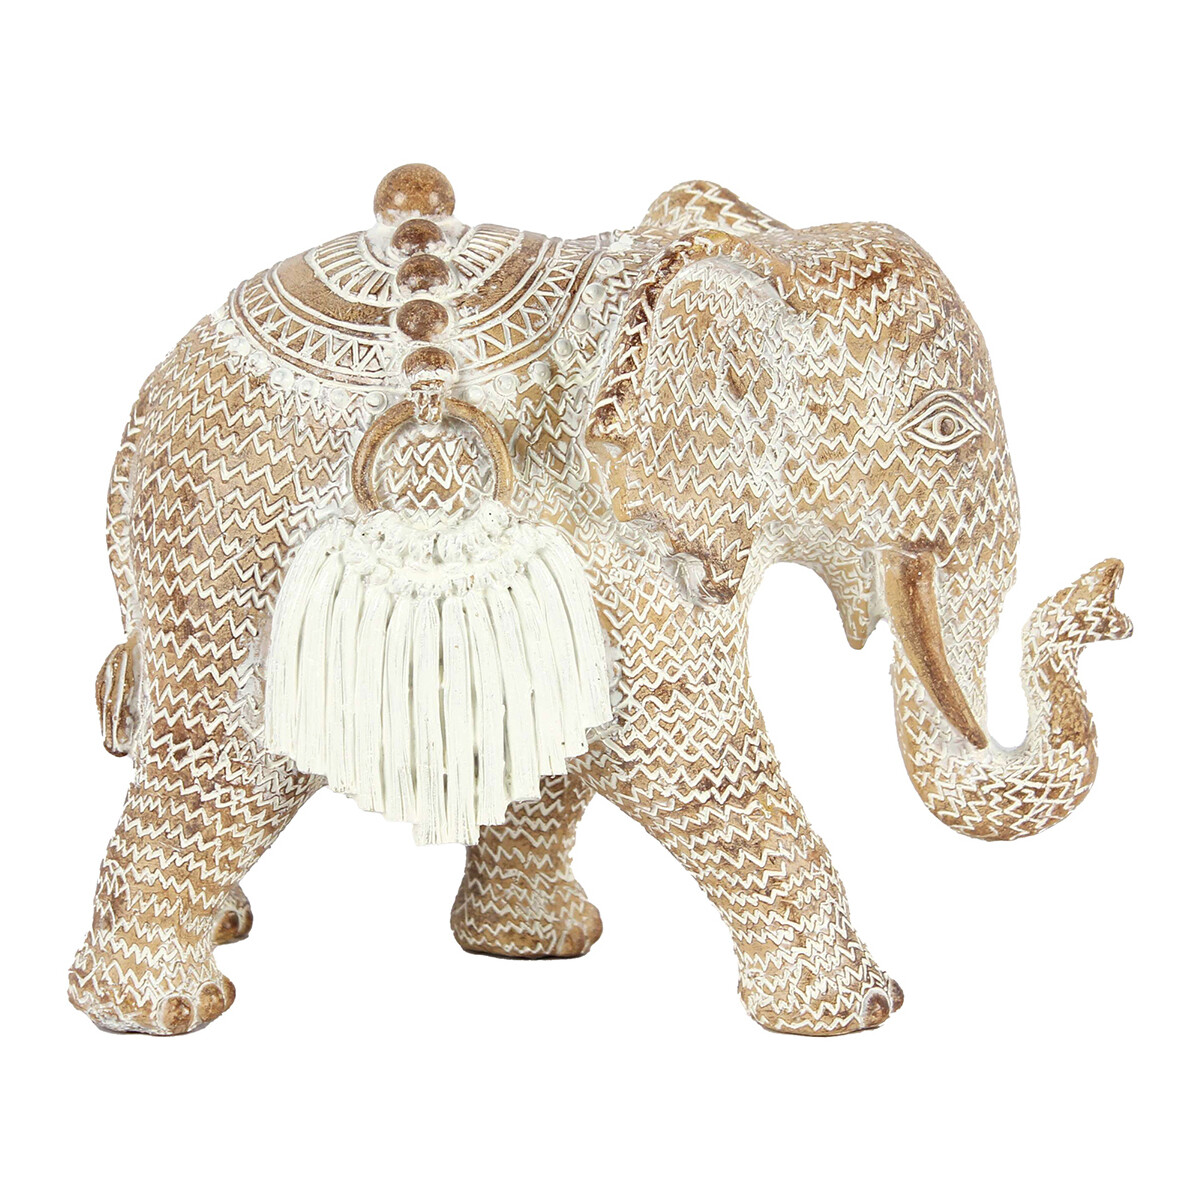 Casa Estatuetas Signes Grimalt Figura De Elefante Branco